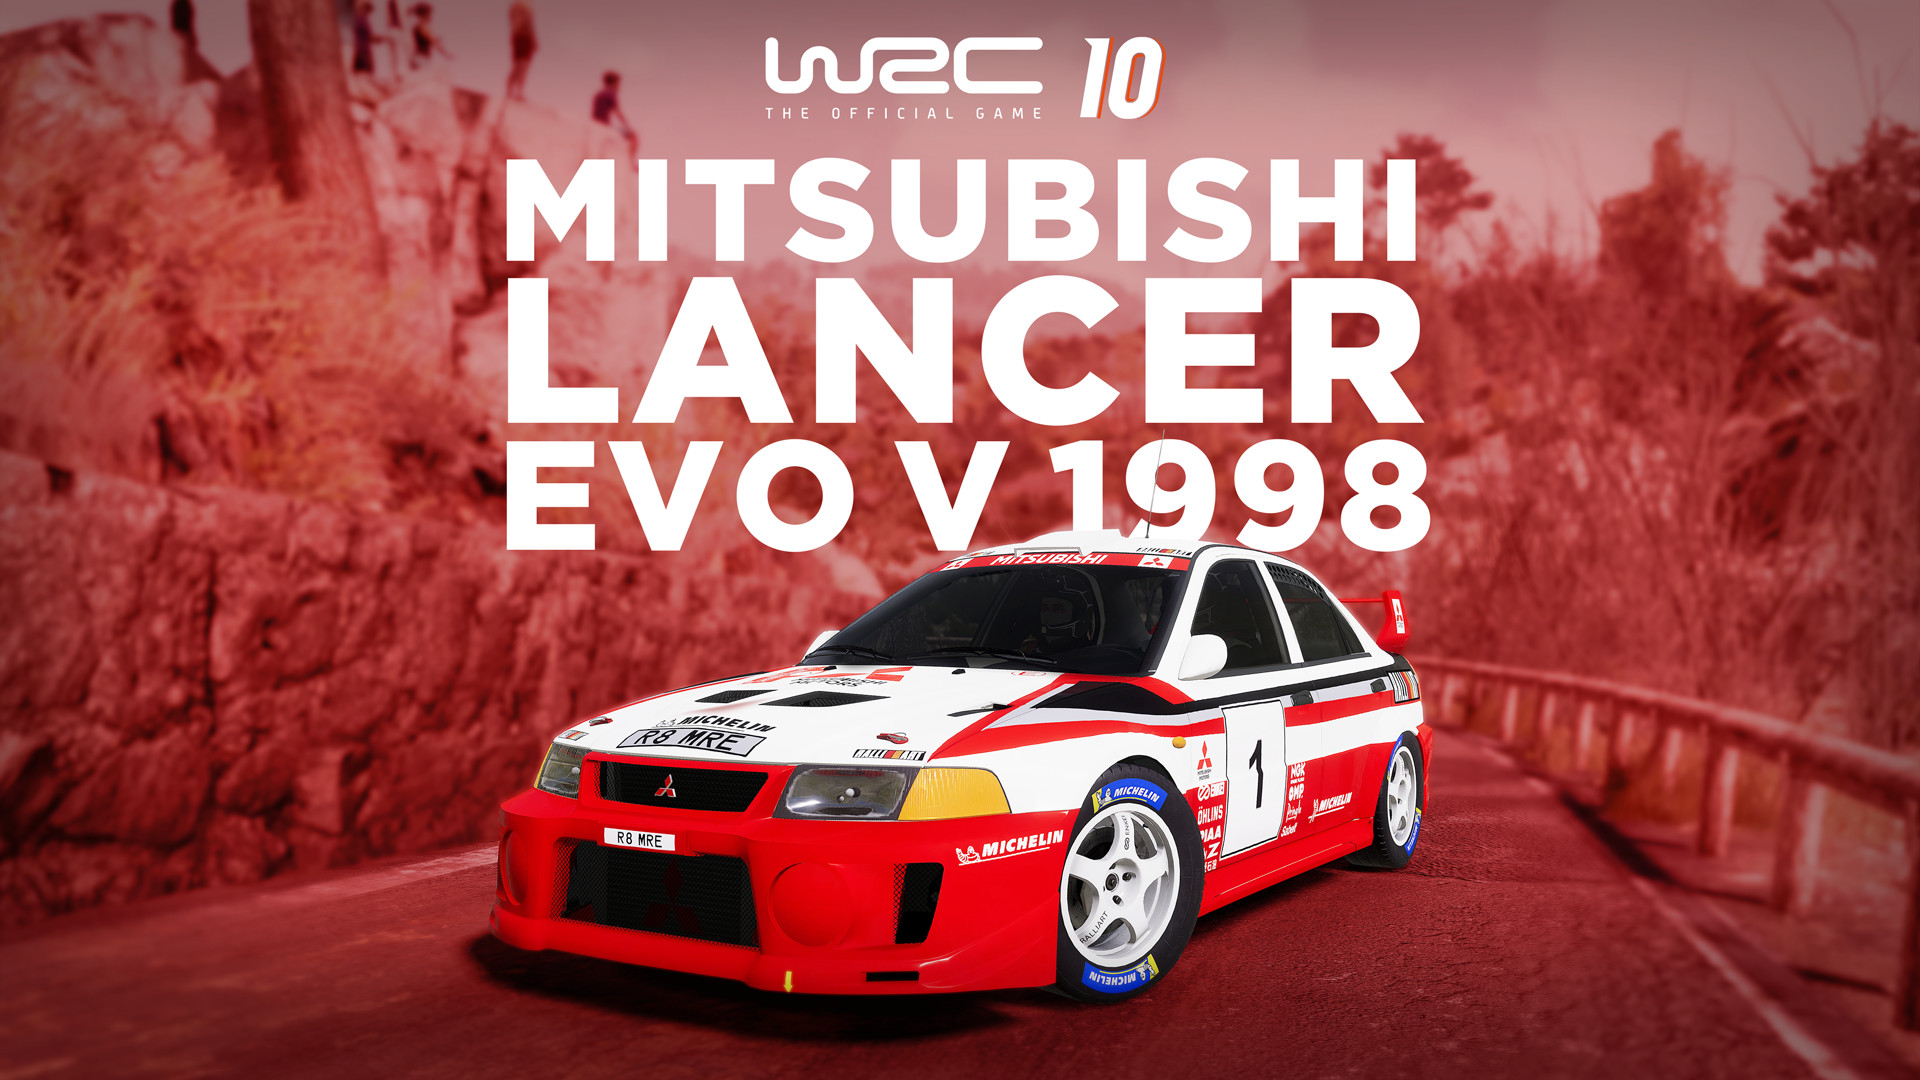 WRC 10 - Mitsubishi Lancer Evo V 1998 DLC Steam CD Key $2.69